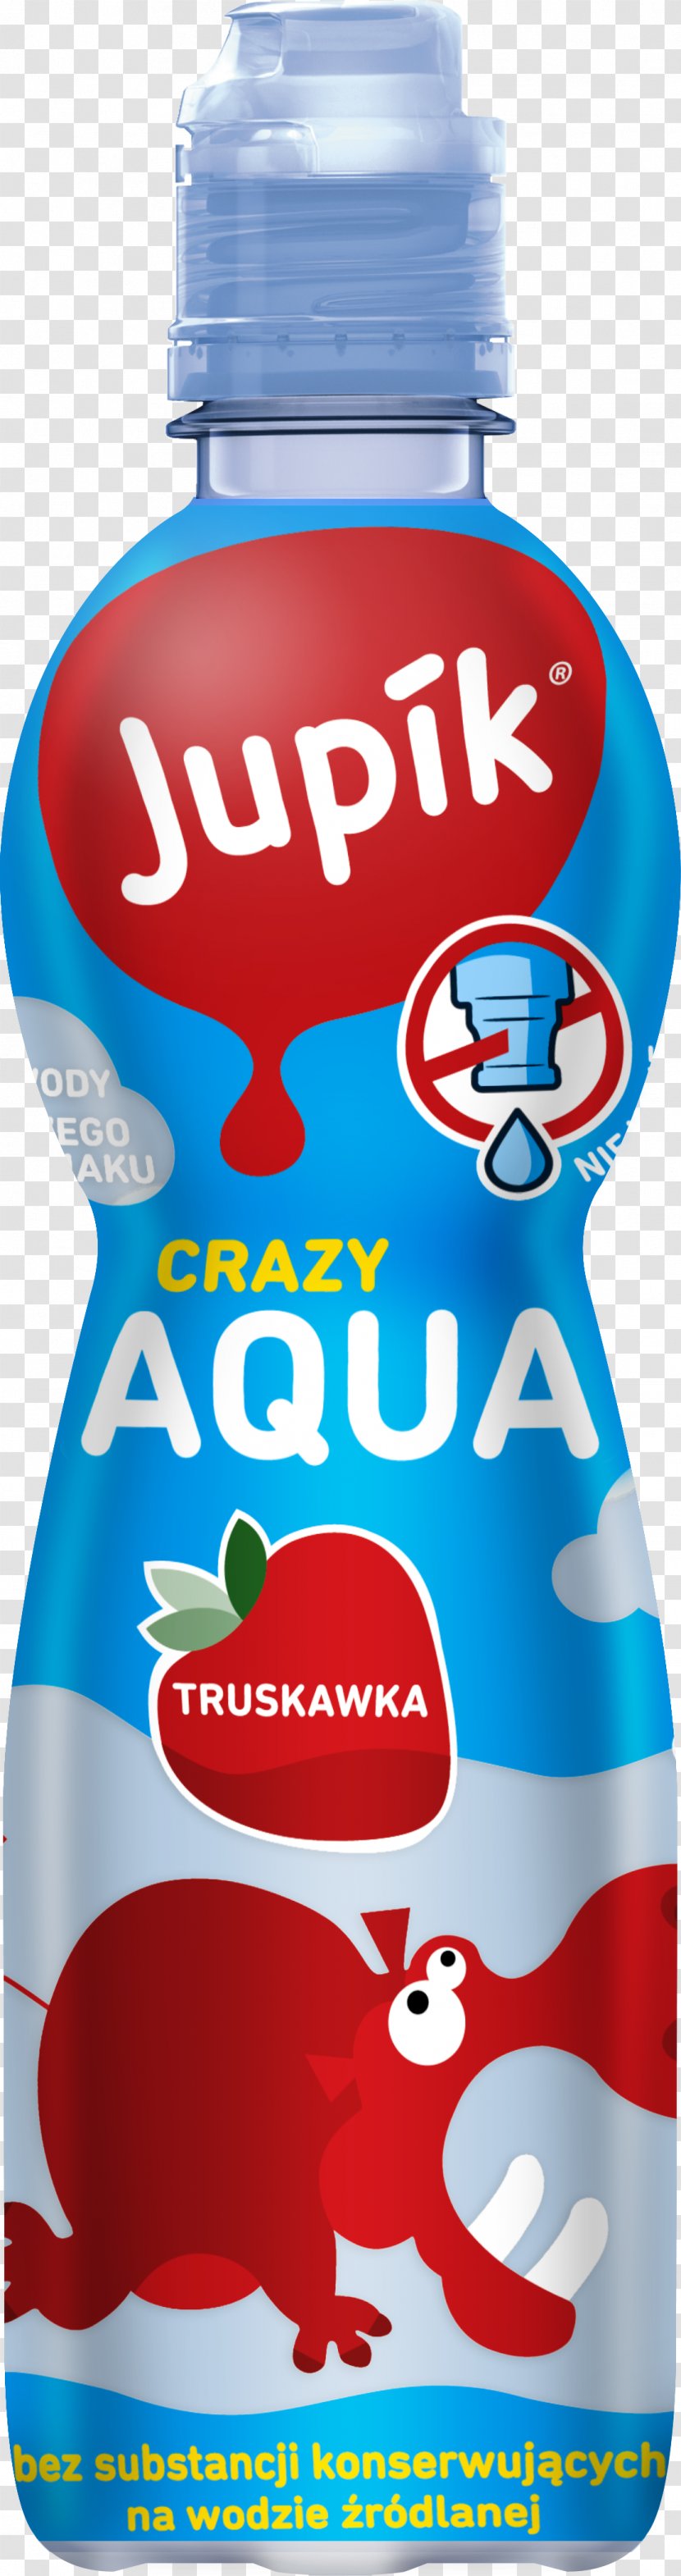 Kofola Juice Water Bottles Fizzy Drinks - Food Industry Transparent PNG